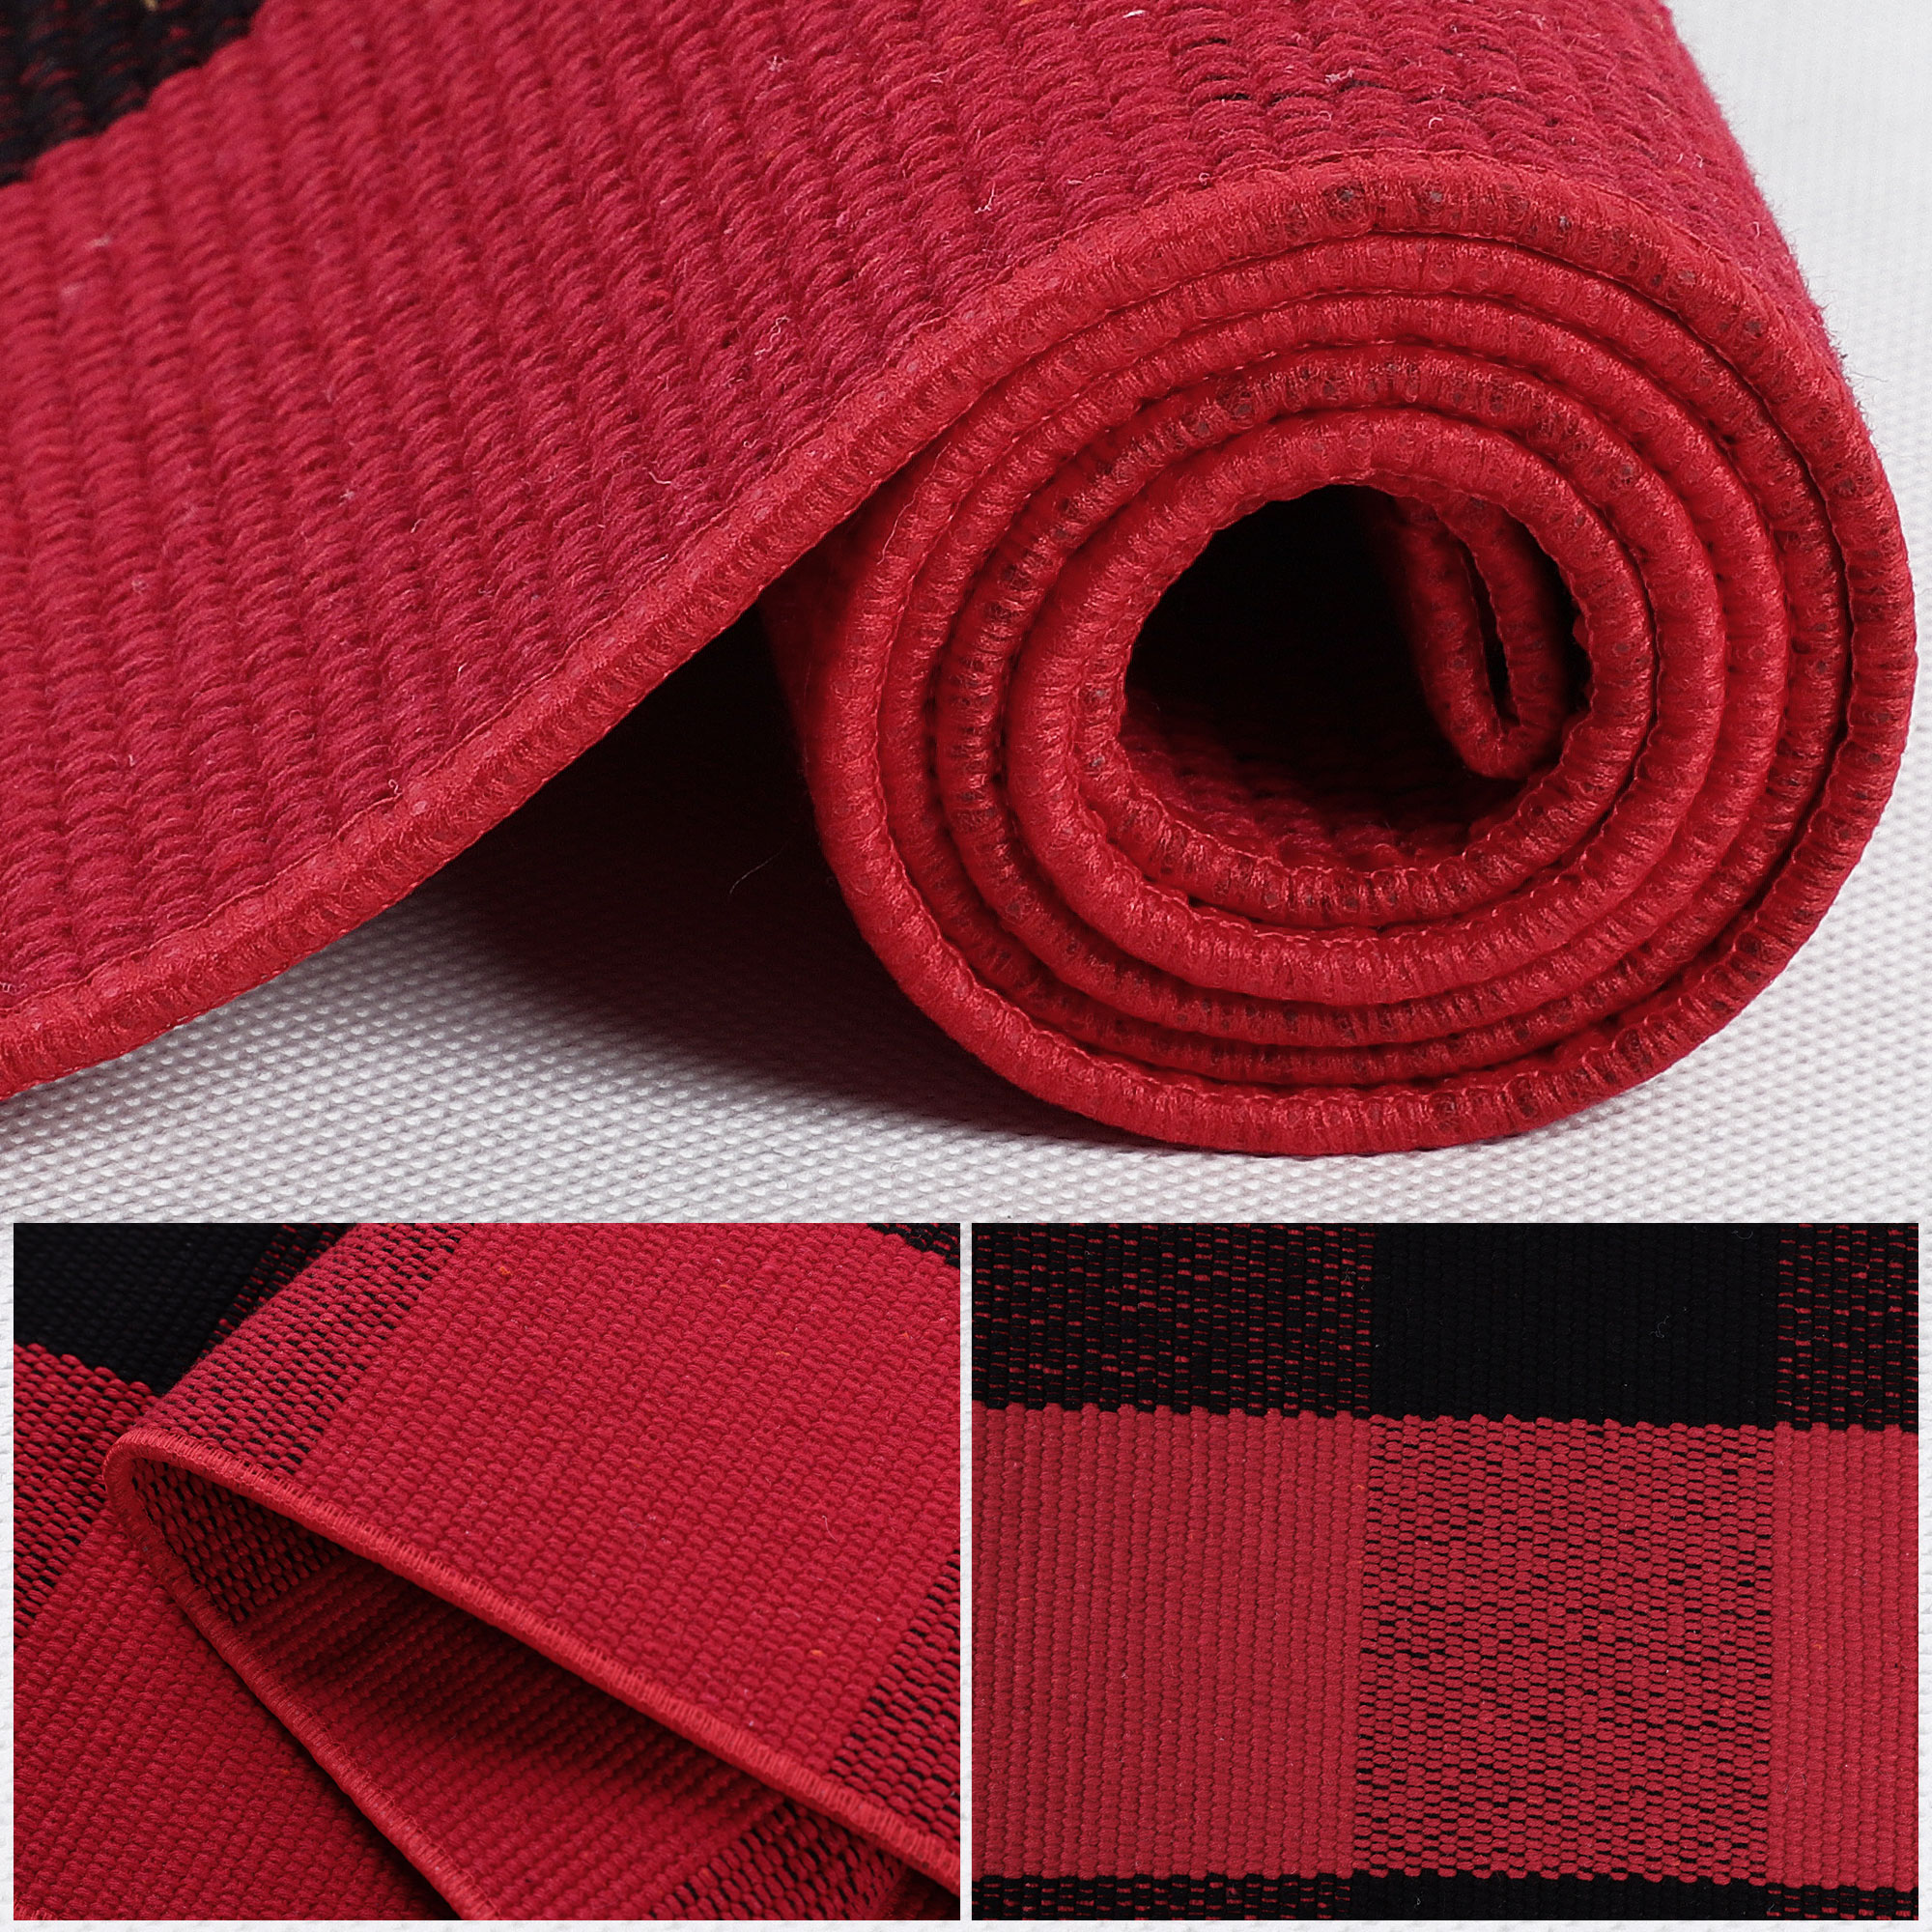 Unique Bargains PiccoCasa Cotton Soft Plaid Rugs Checkered Door Carpet Mat Red & Black 59"x35"